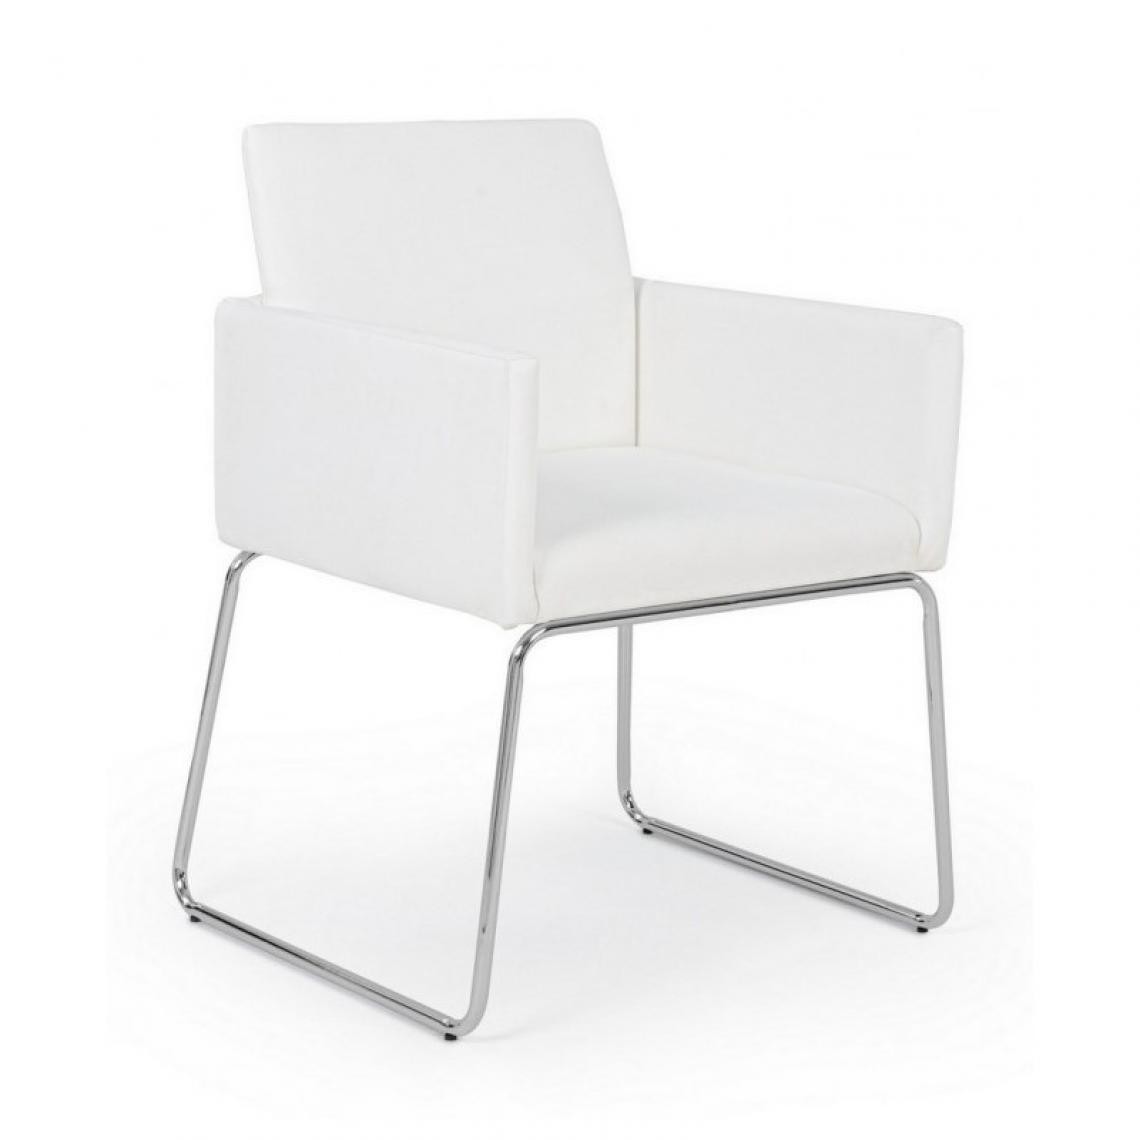 Webmarketpoint - Chaise avec accoudoirs en simili cuir Blanc SIXTY 60x54x h80,5 cm - Chaises